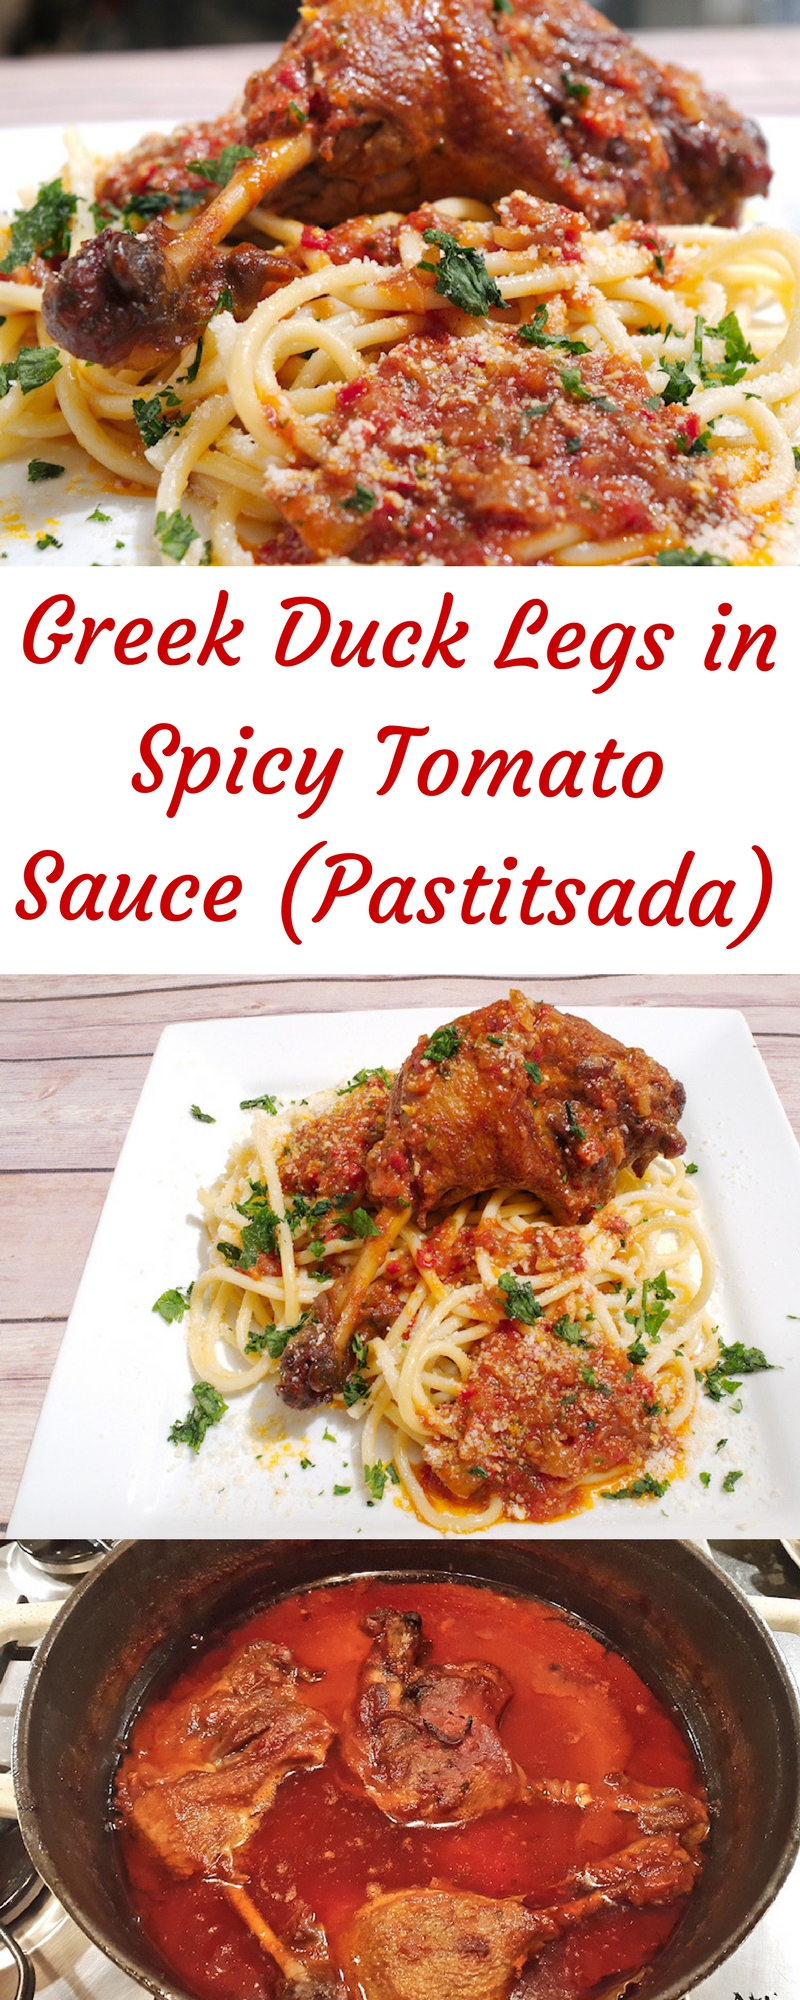 Greek Duck Legs in Spicy Tomato Sauce (Pastitsada)